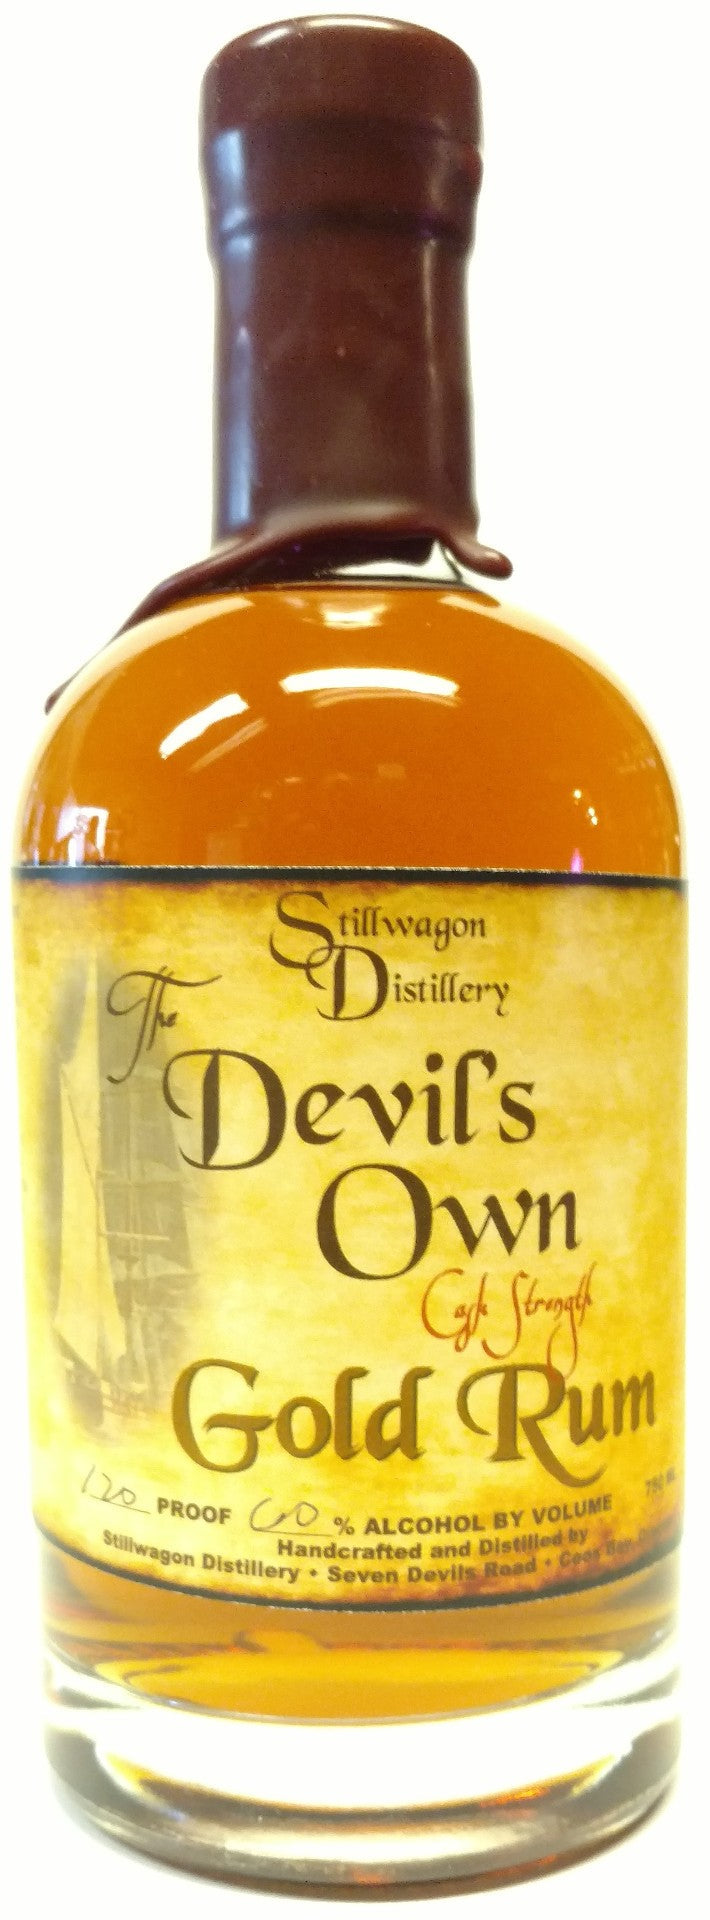 Stillwagon Distillery The Devils Own 120 Proof Gold Rum